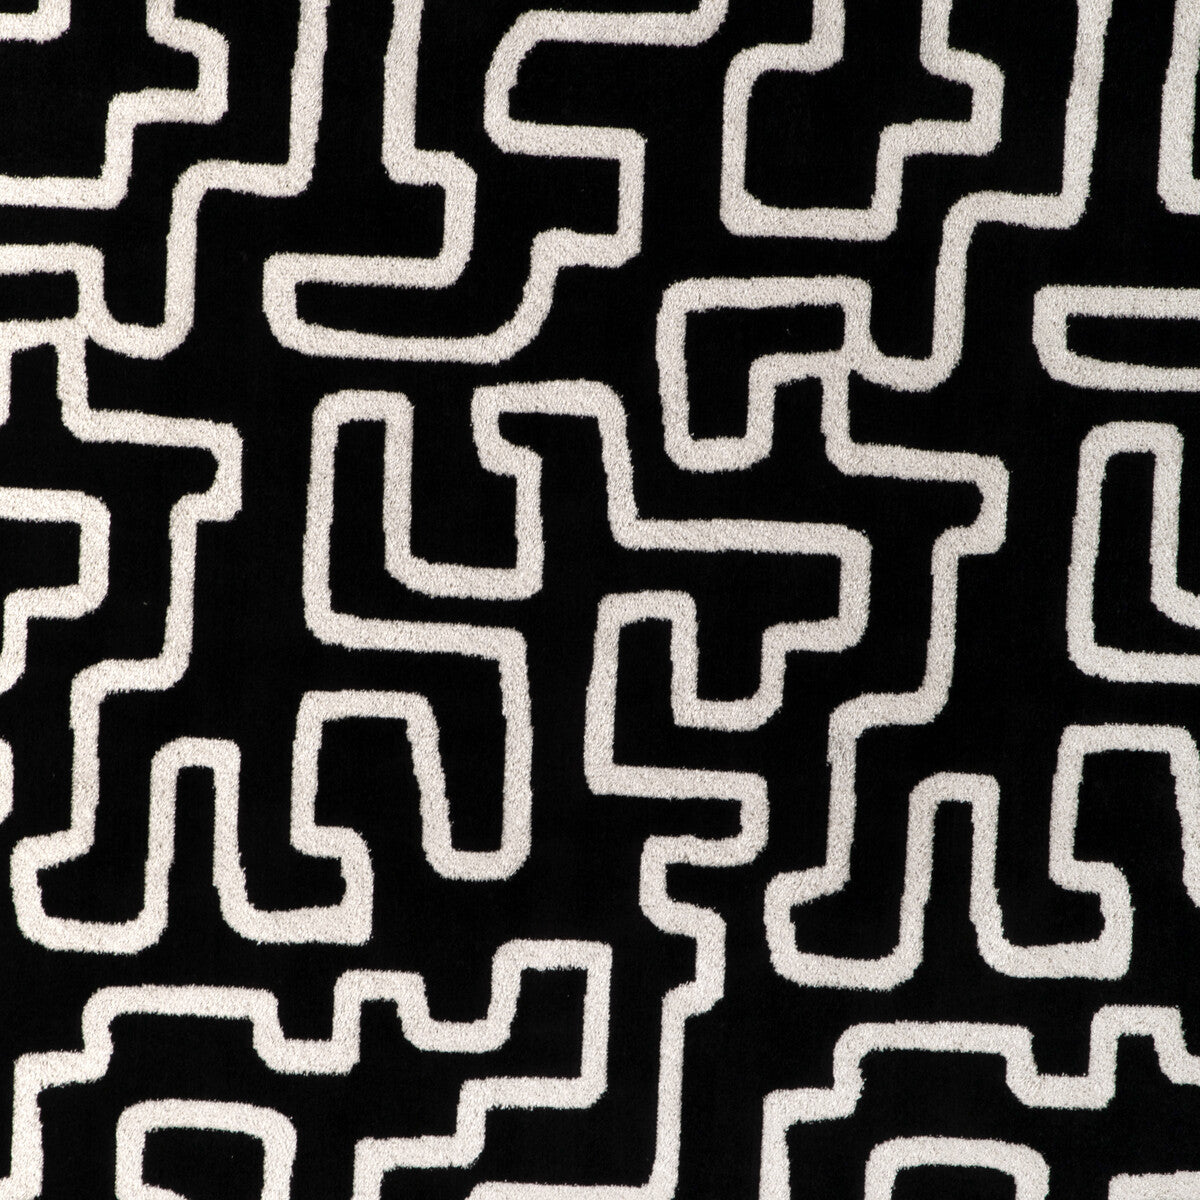 Kravet Design fabric in 37081-8 color - pattern 37081.8.0 - by Kravet Design in the Modern Velvets collection